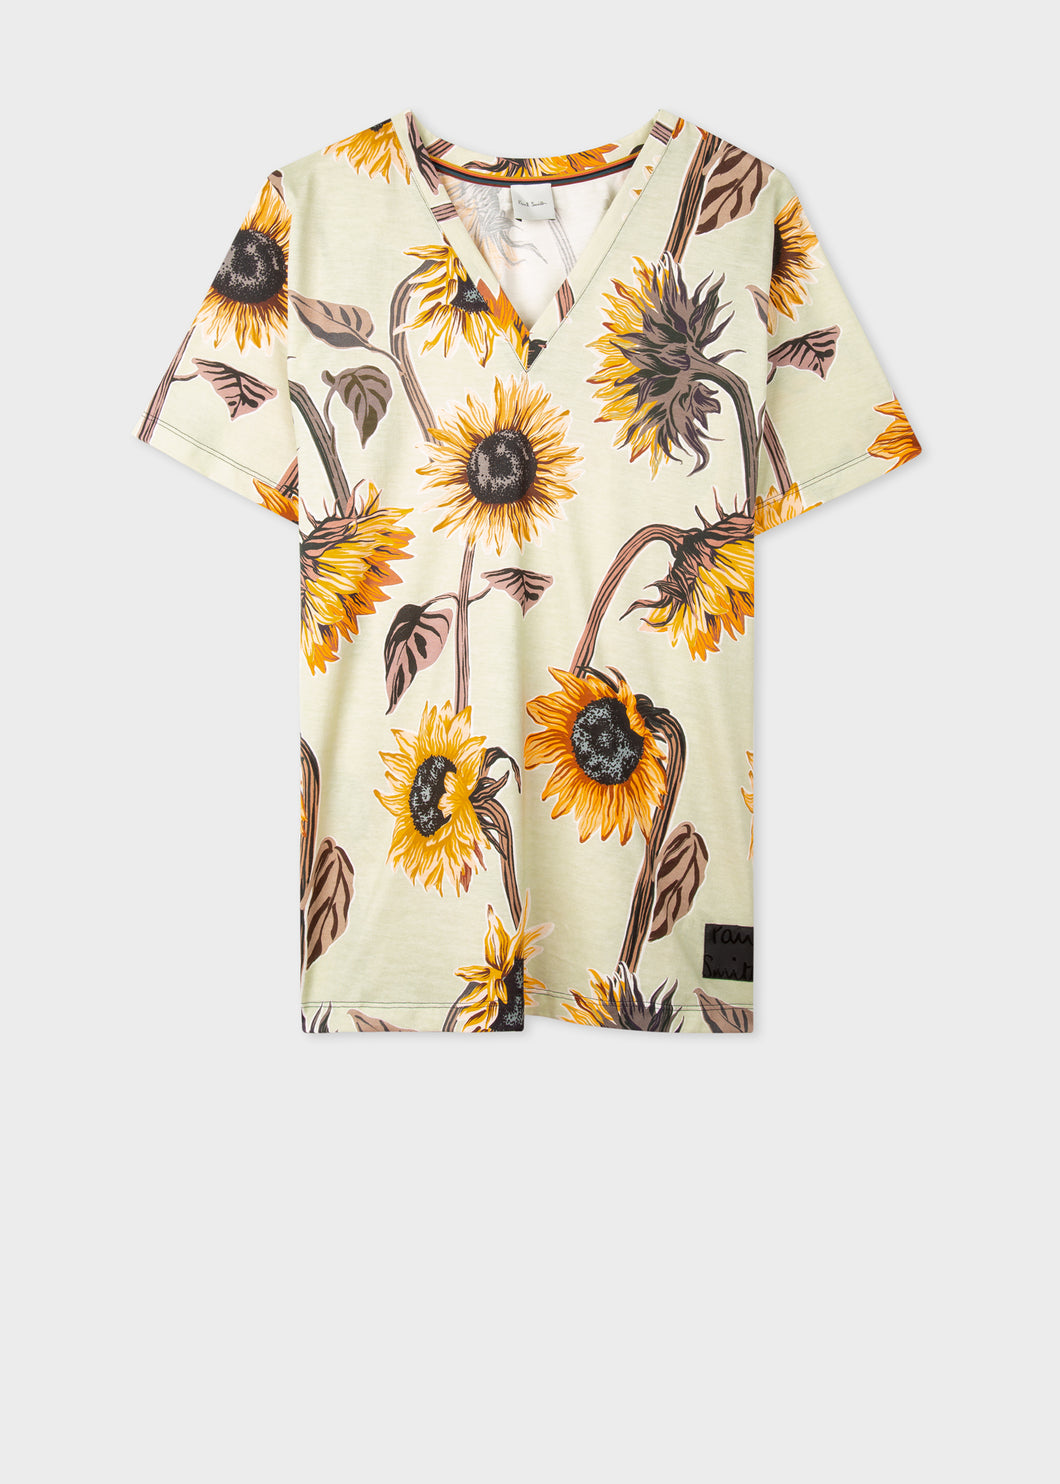 Paul Smith Sunflower Print T-shirt